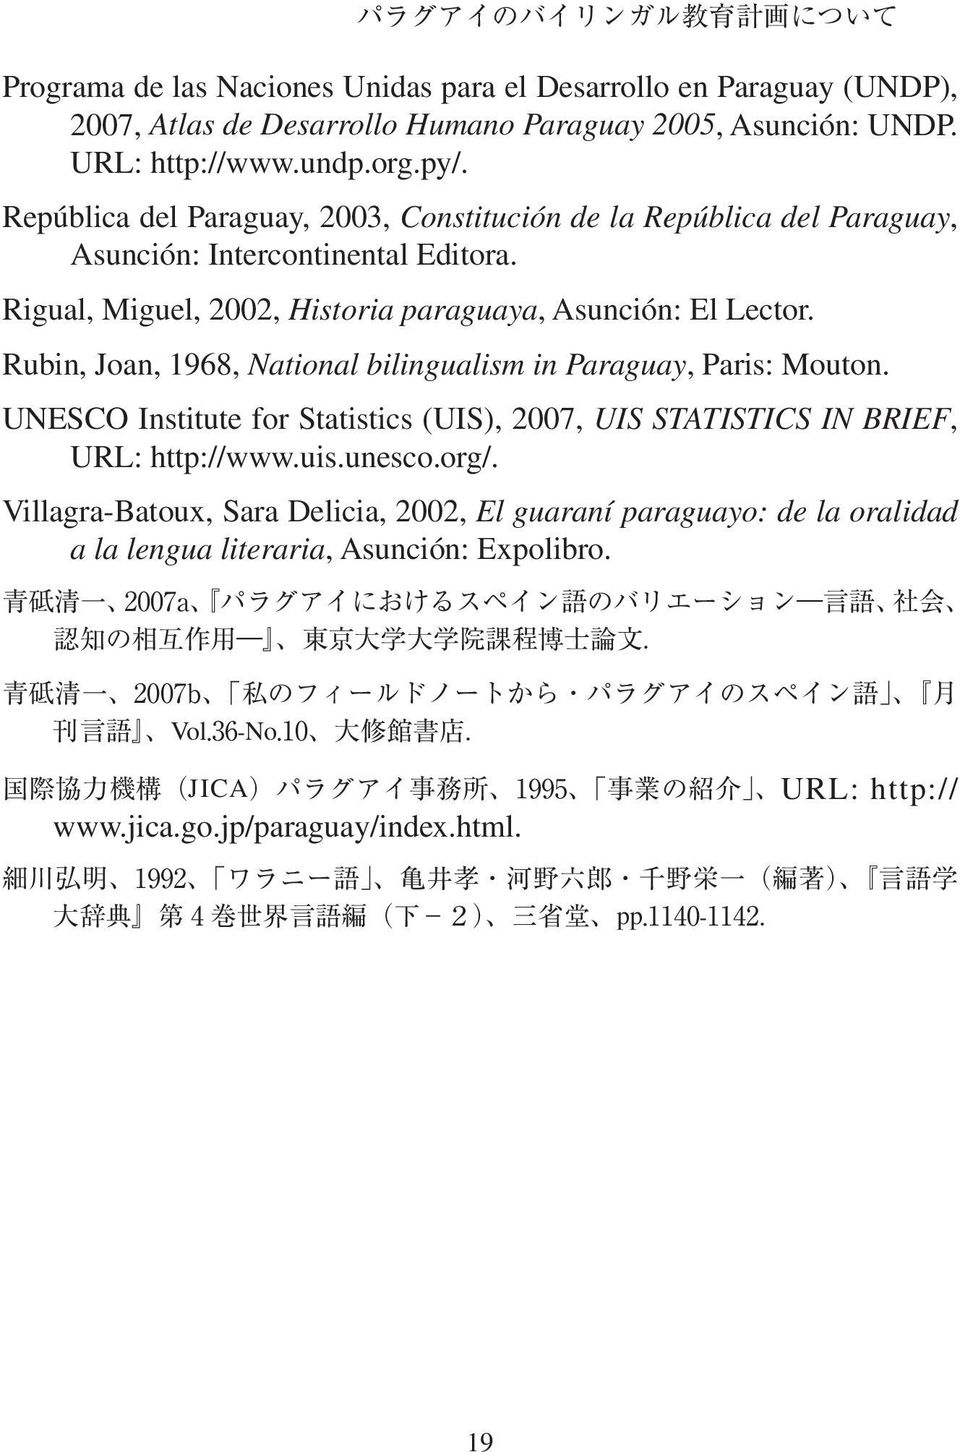 Rubin, Joan, 1968, National bilingualism in Paraguay, Paris: Mouton. UNESCO Institute for Statistics (UIS), 2007, UIS STATISTICS IN BRIEF, URL: http://www.uis.unesco.org/.